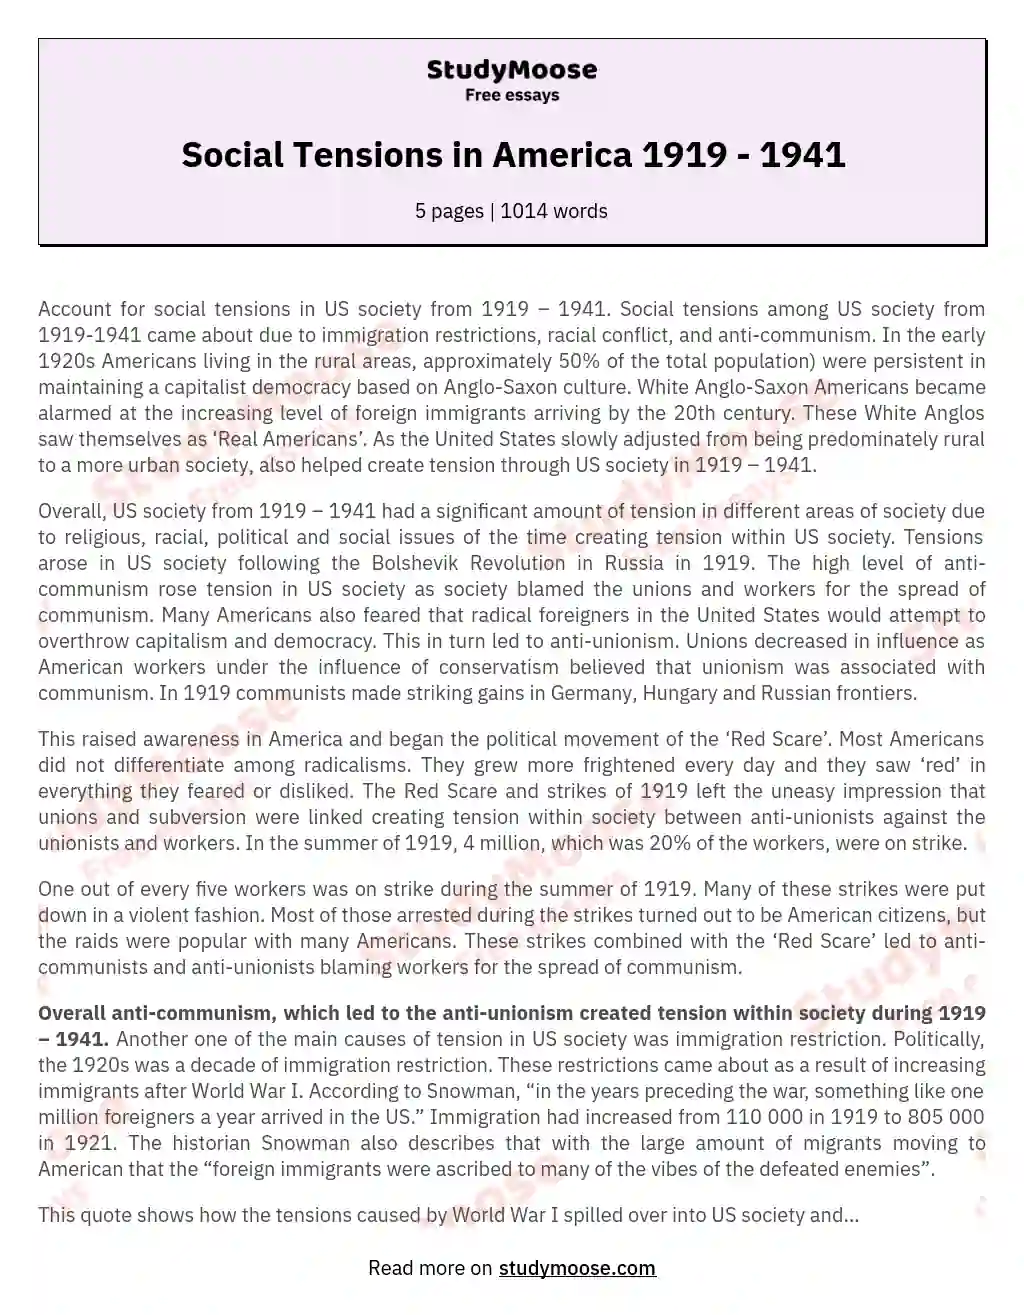 Social Tensions in America 1919 - 1941 essay